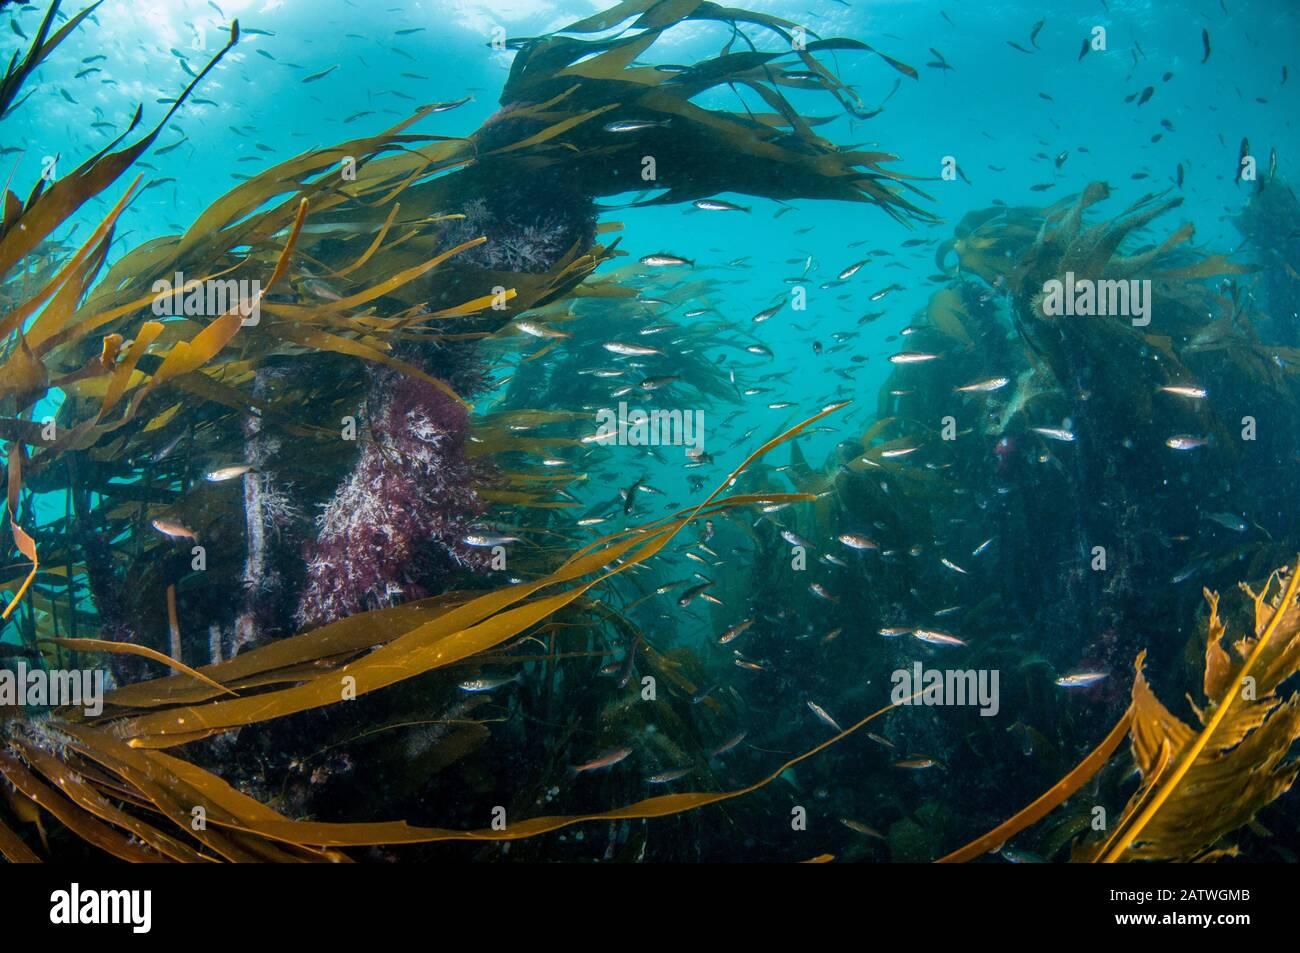 Bosque de kelp (Laminaria digitata) con peces pequeños, Shetland, Escocia, Reino Unido, julio. Foto de stock